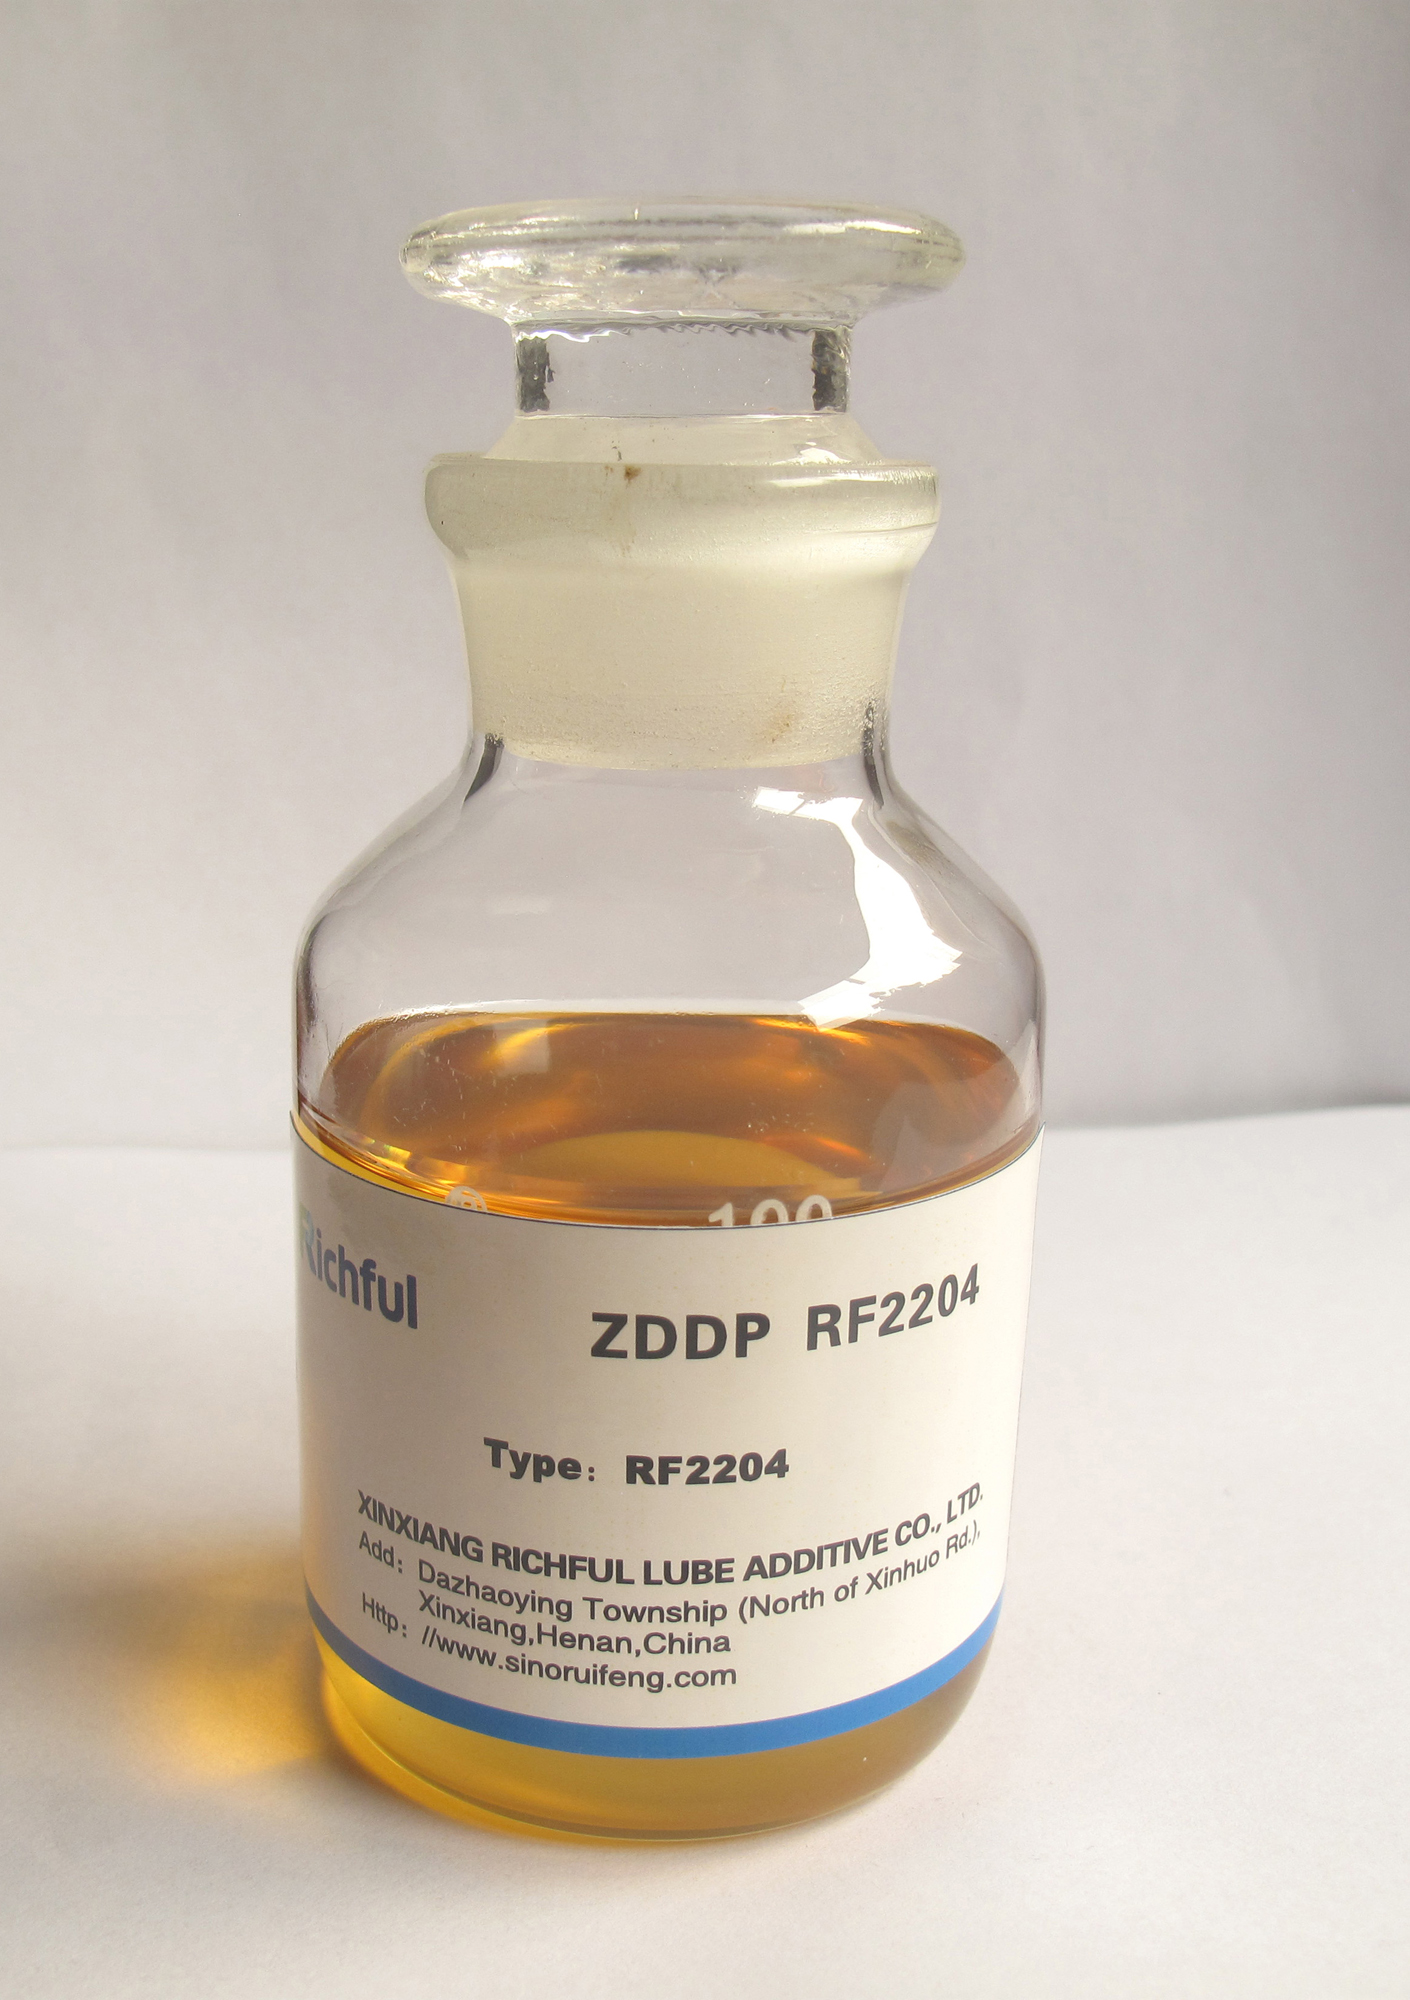 ZDDP Richful Lubricant Добавки Антиоксидант и ингибитор коррозии ZDDP Цинк Первично-вторичный алкилдитиофосфат RF2204